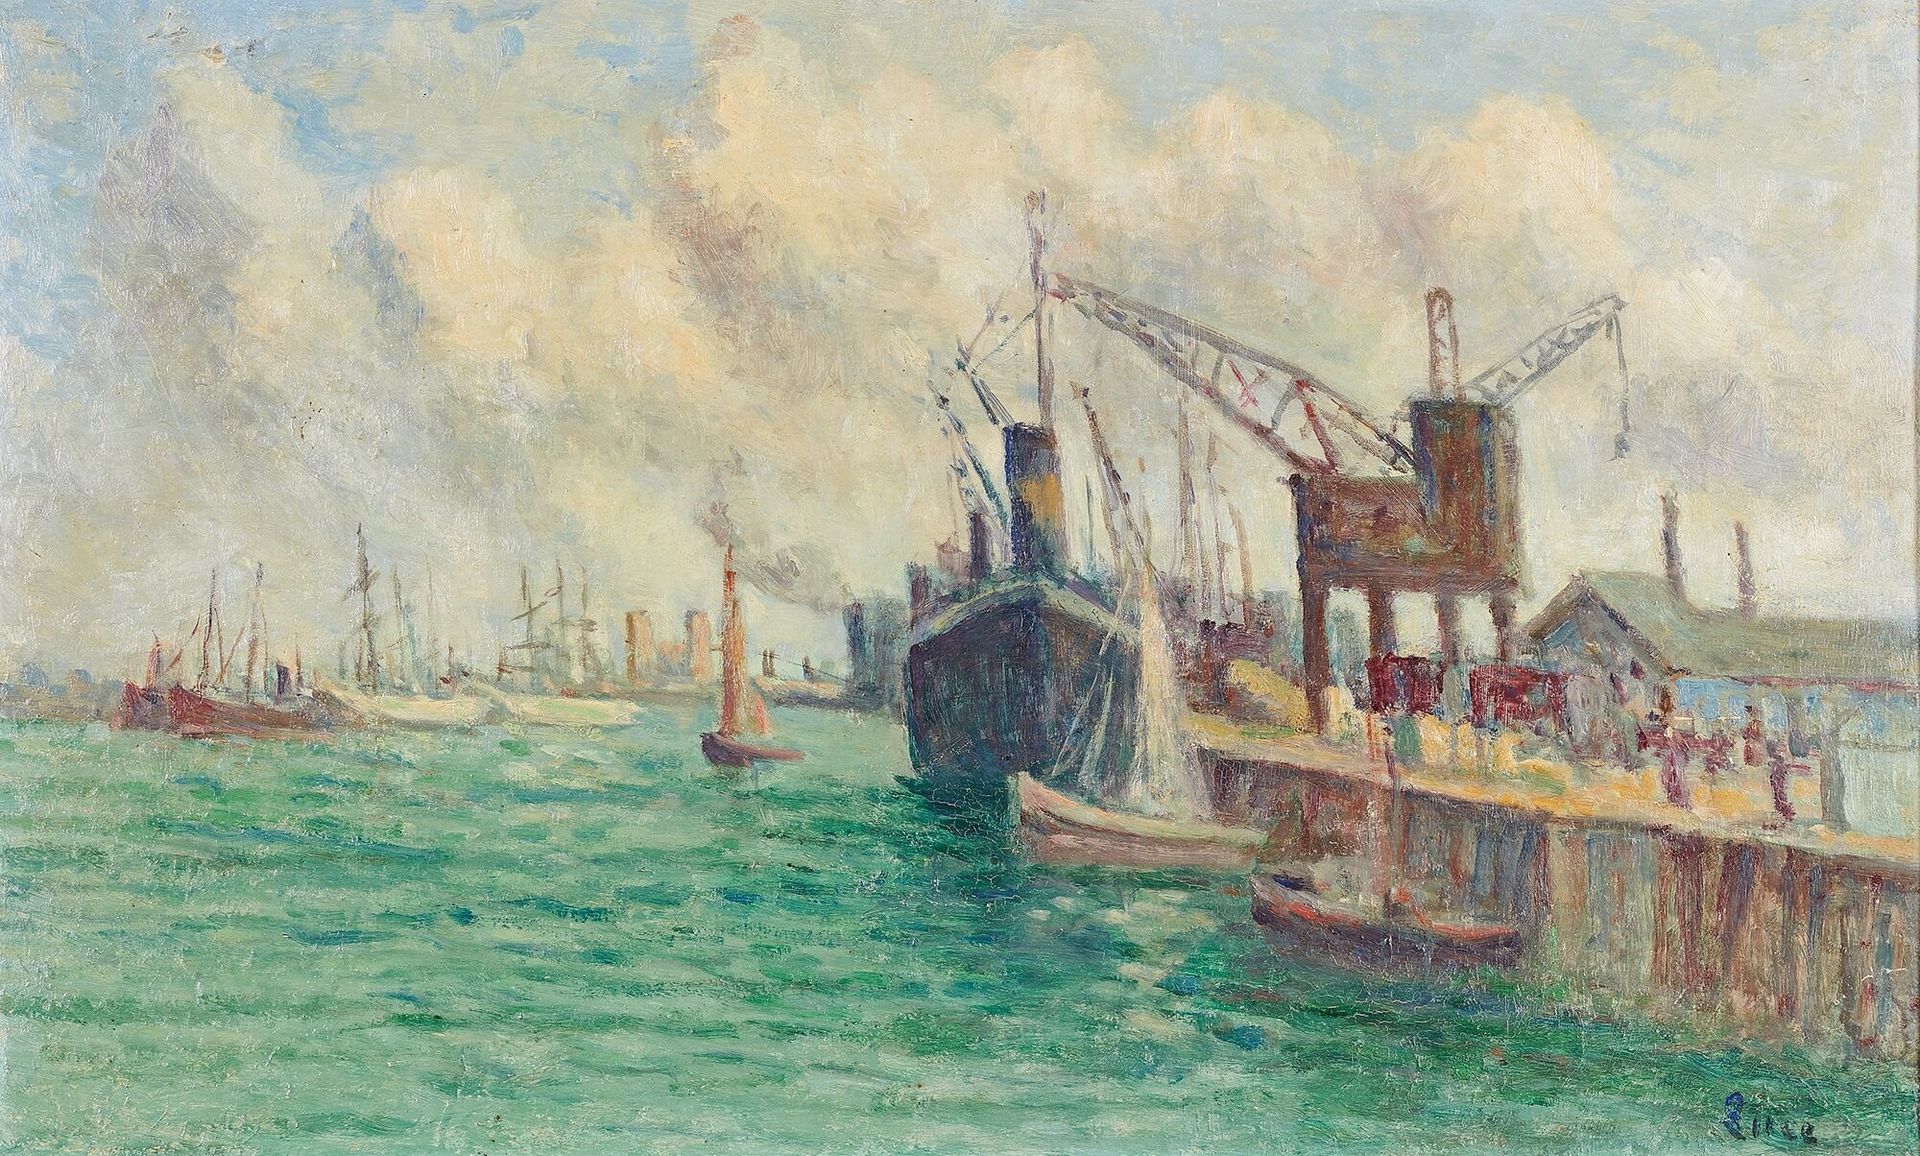 Null 马克西米利安-卢斯(1858-1941)

鹿特丹港，约1908年

板面油画，右下角有签名

40 x 63 cm

出处 :

- 私人收藏。

&hellip;